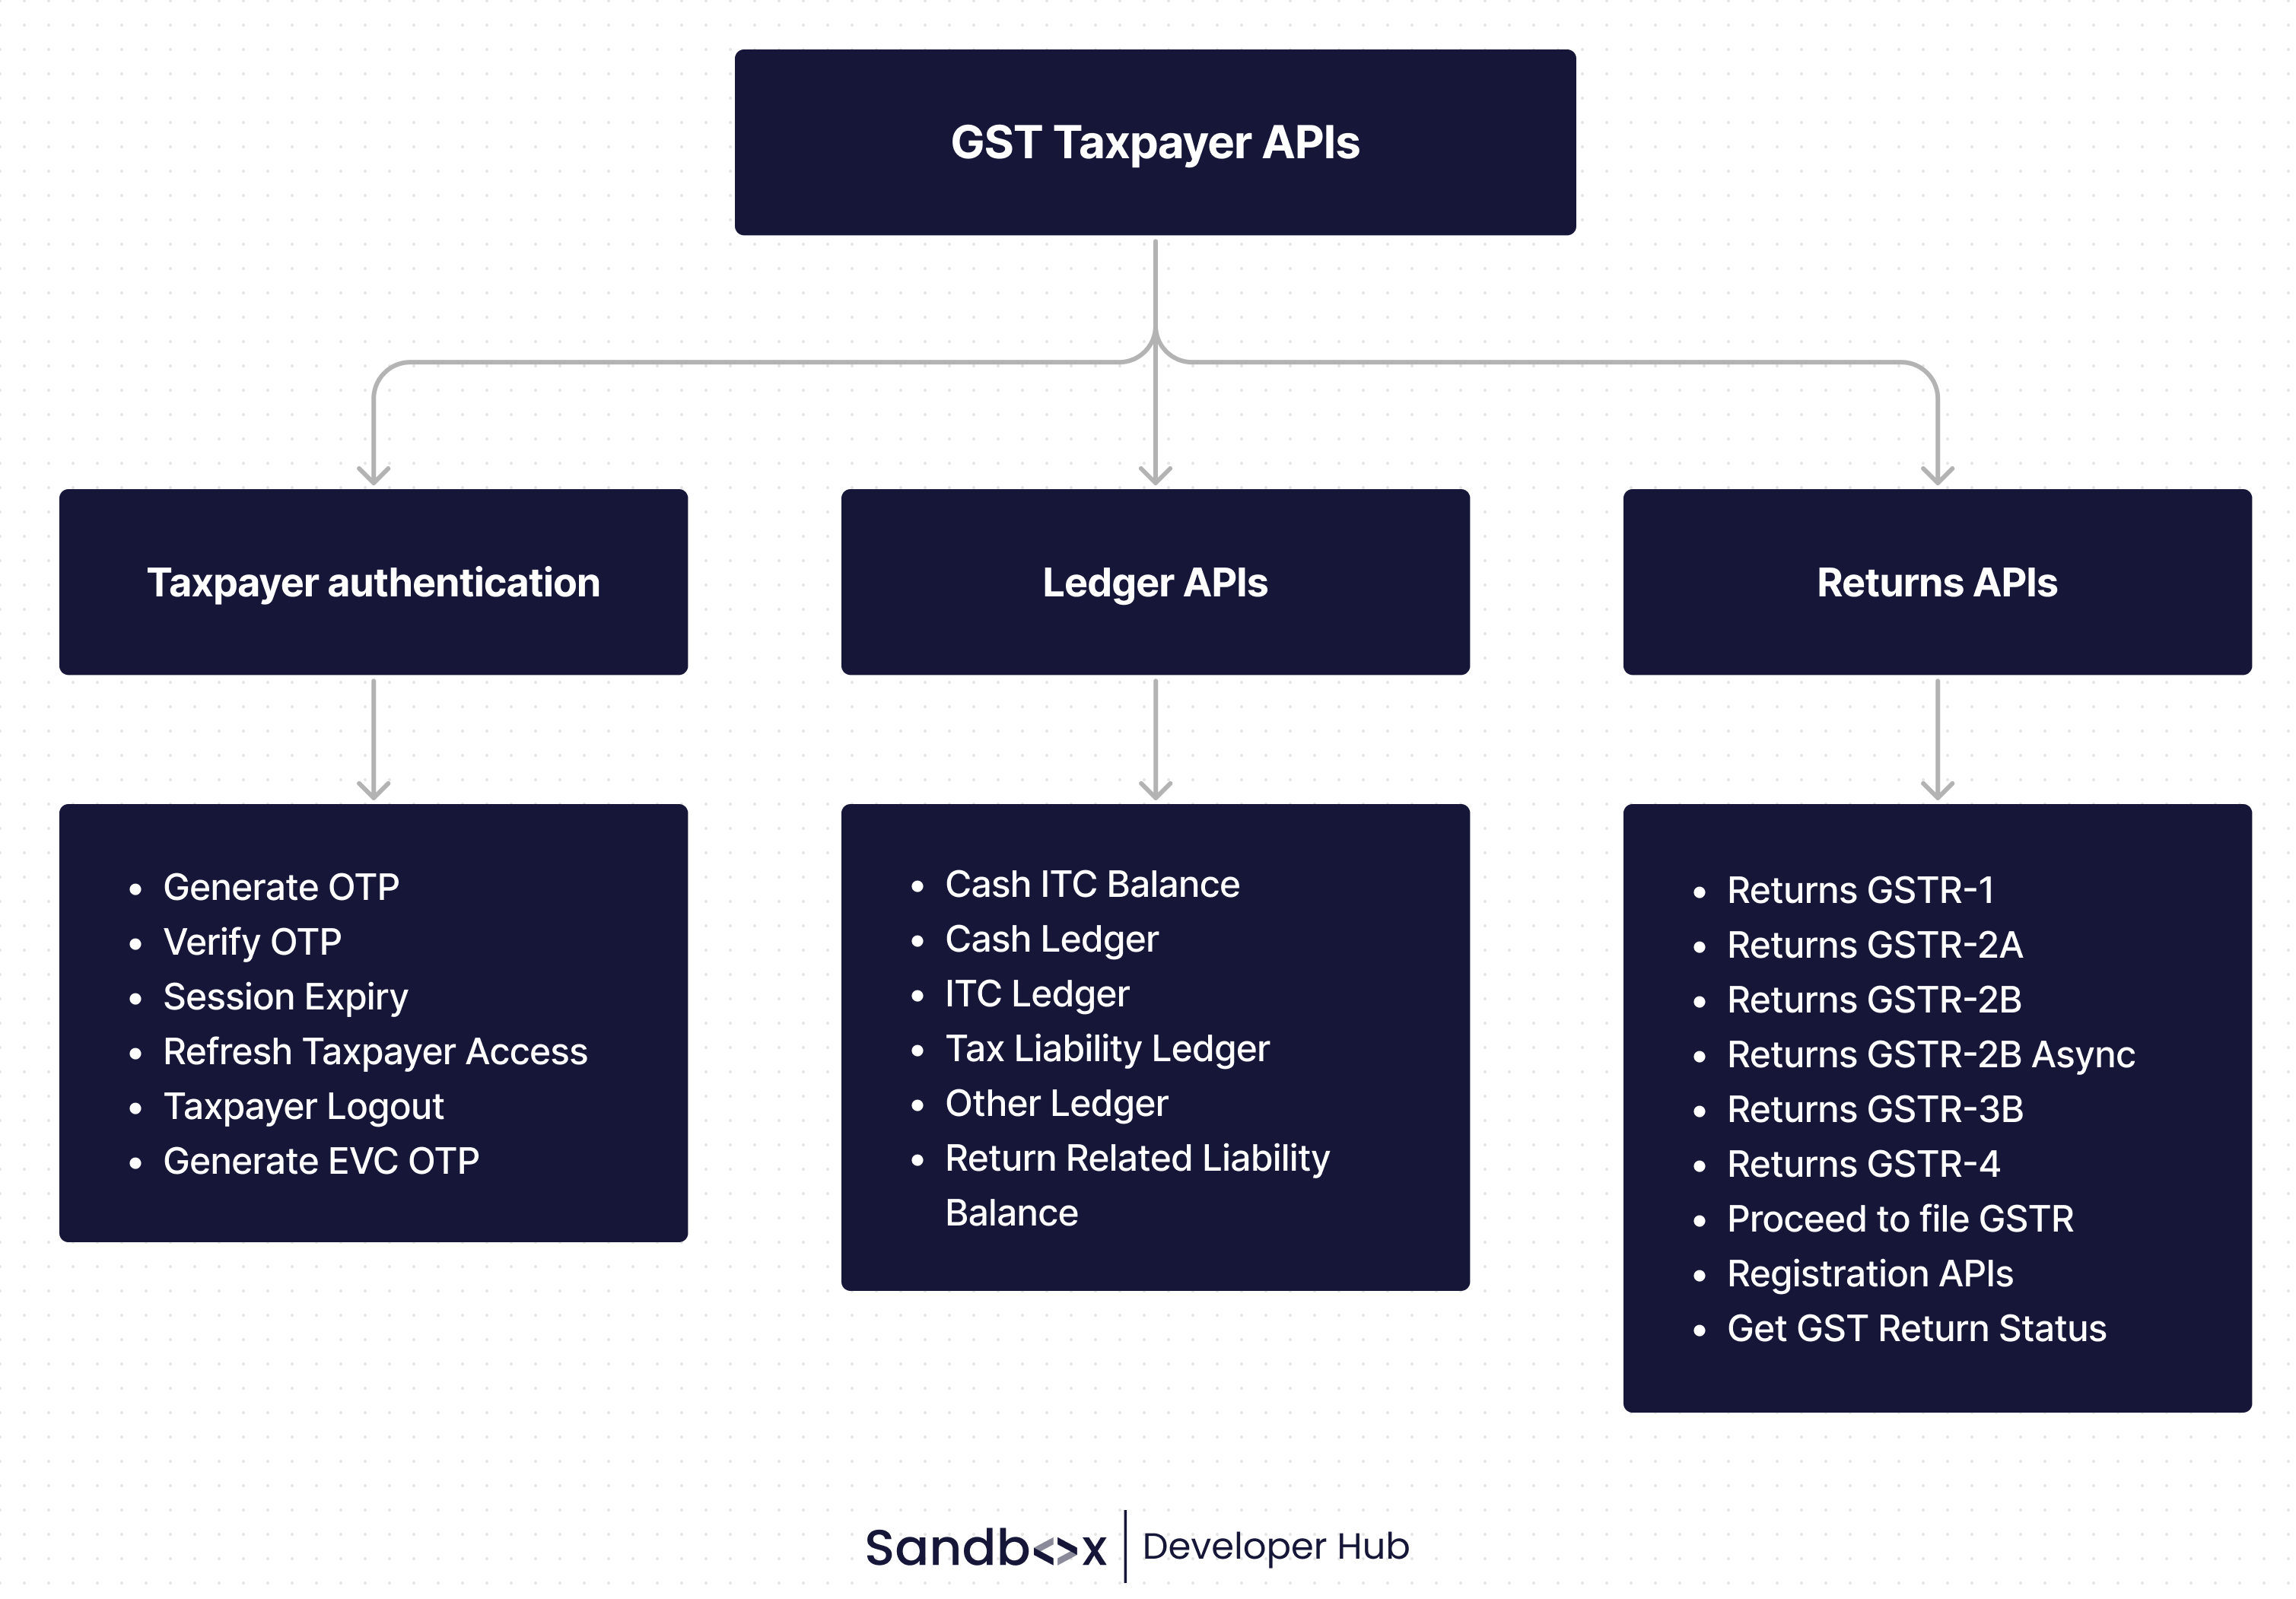 GST Taxpayer APIs